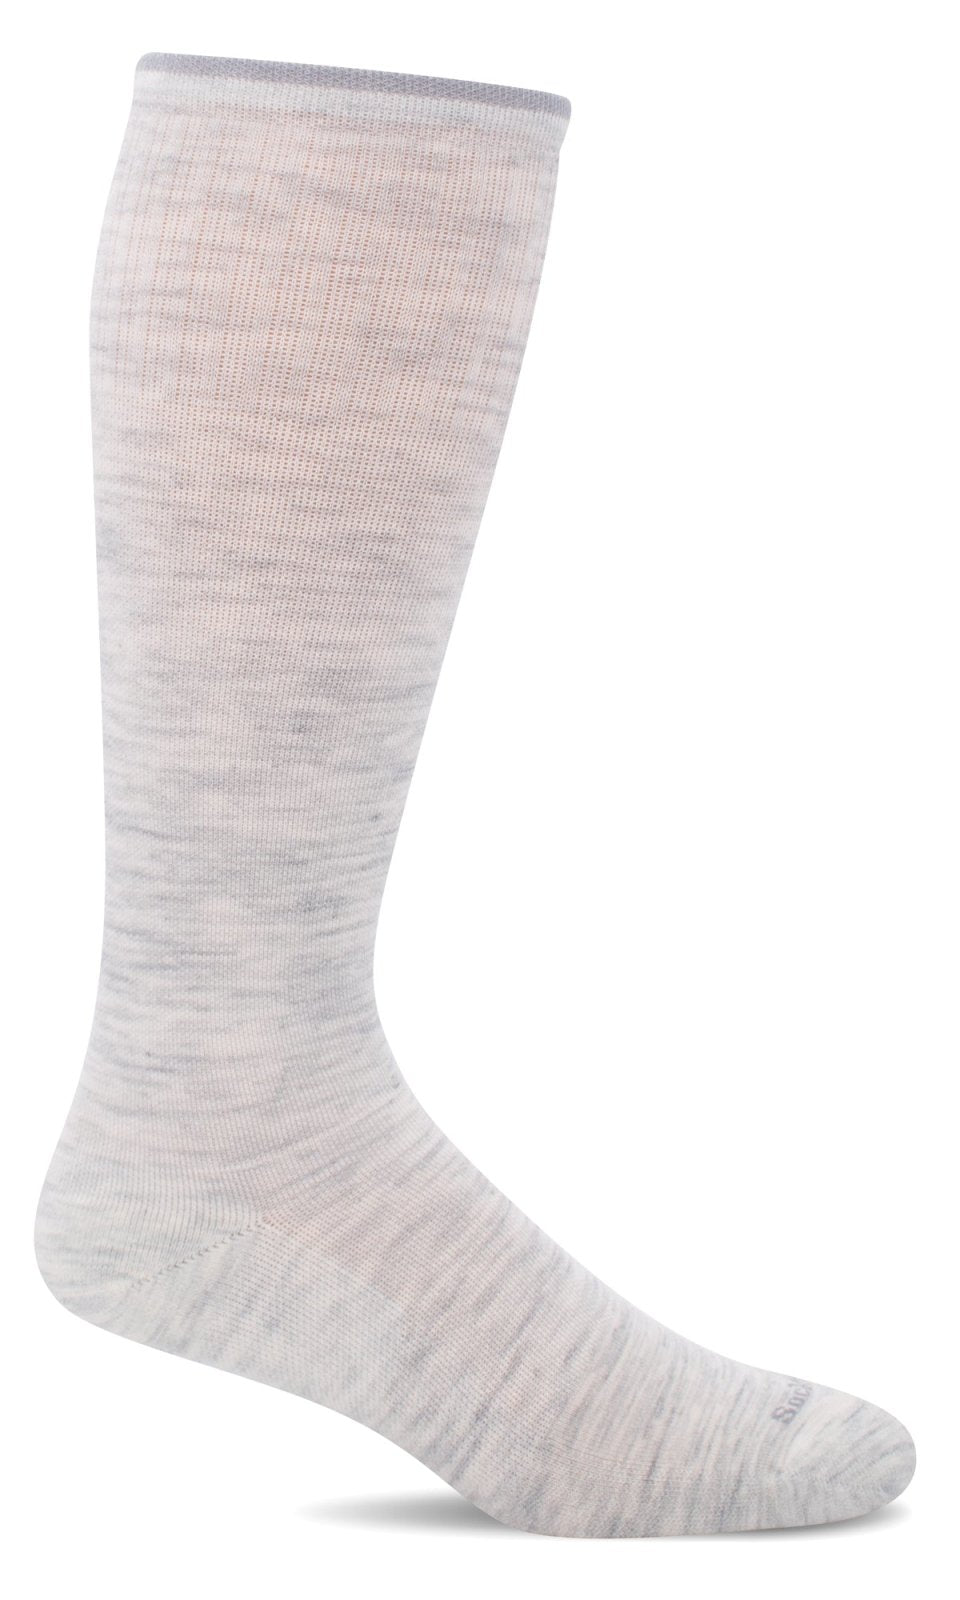 Women's Merino Wool Compression Socks